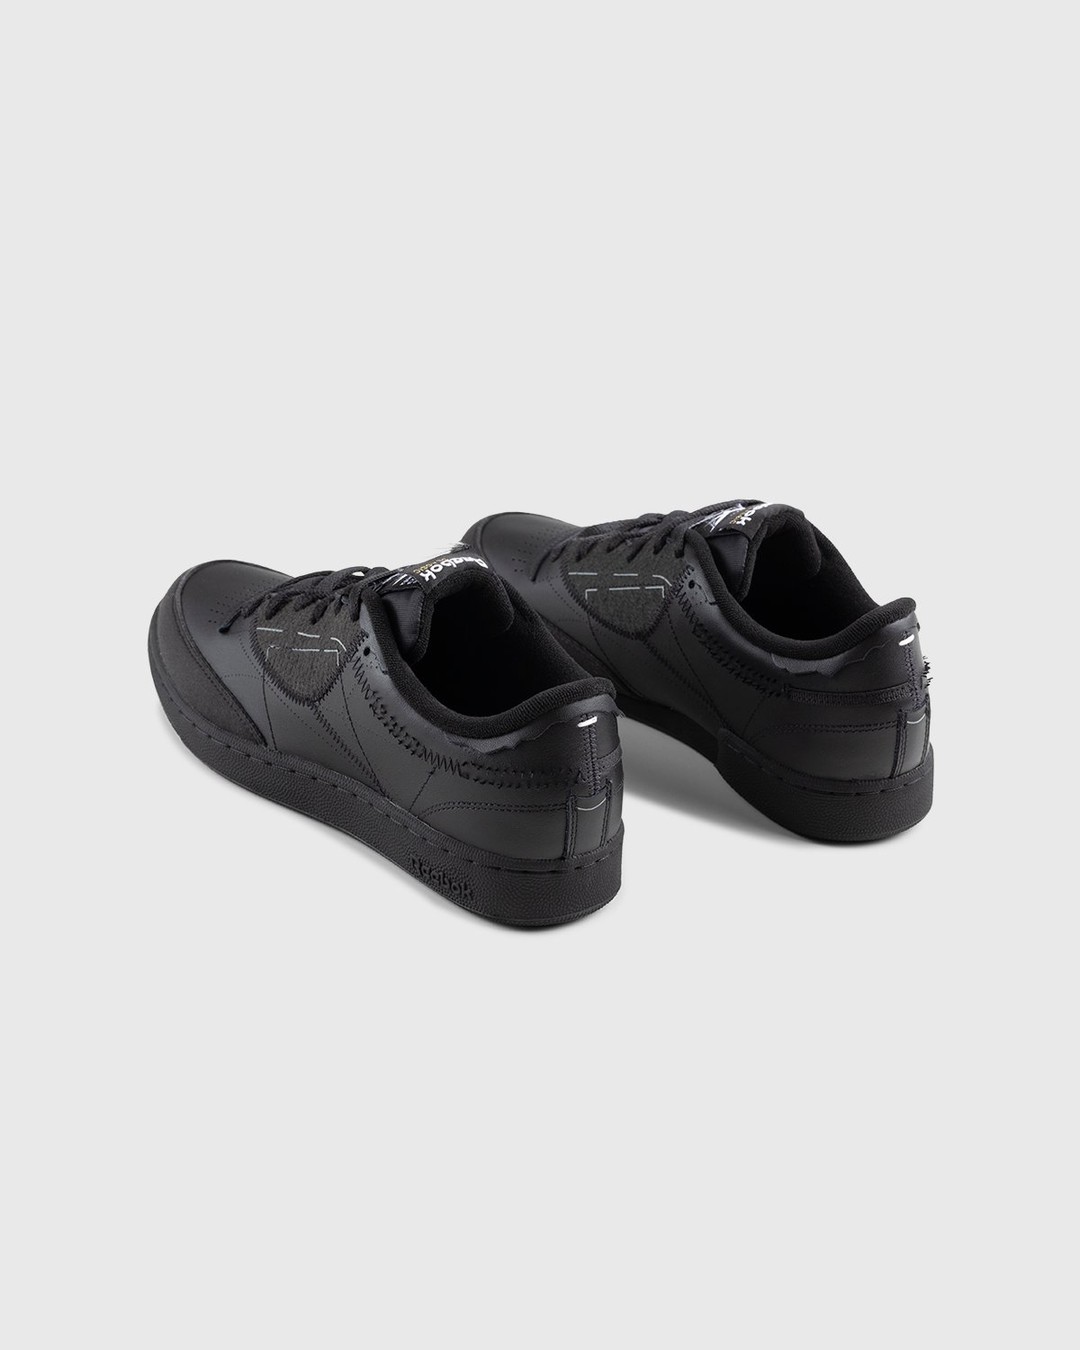 Maison Margiela x Reebok – Club C Memory Of Black/Footwear White/Black - Sneakers - Black - Image 5